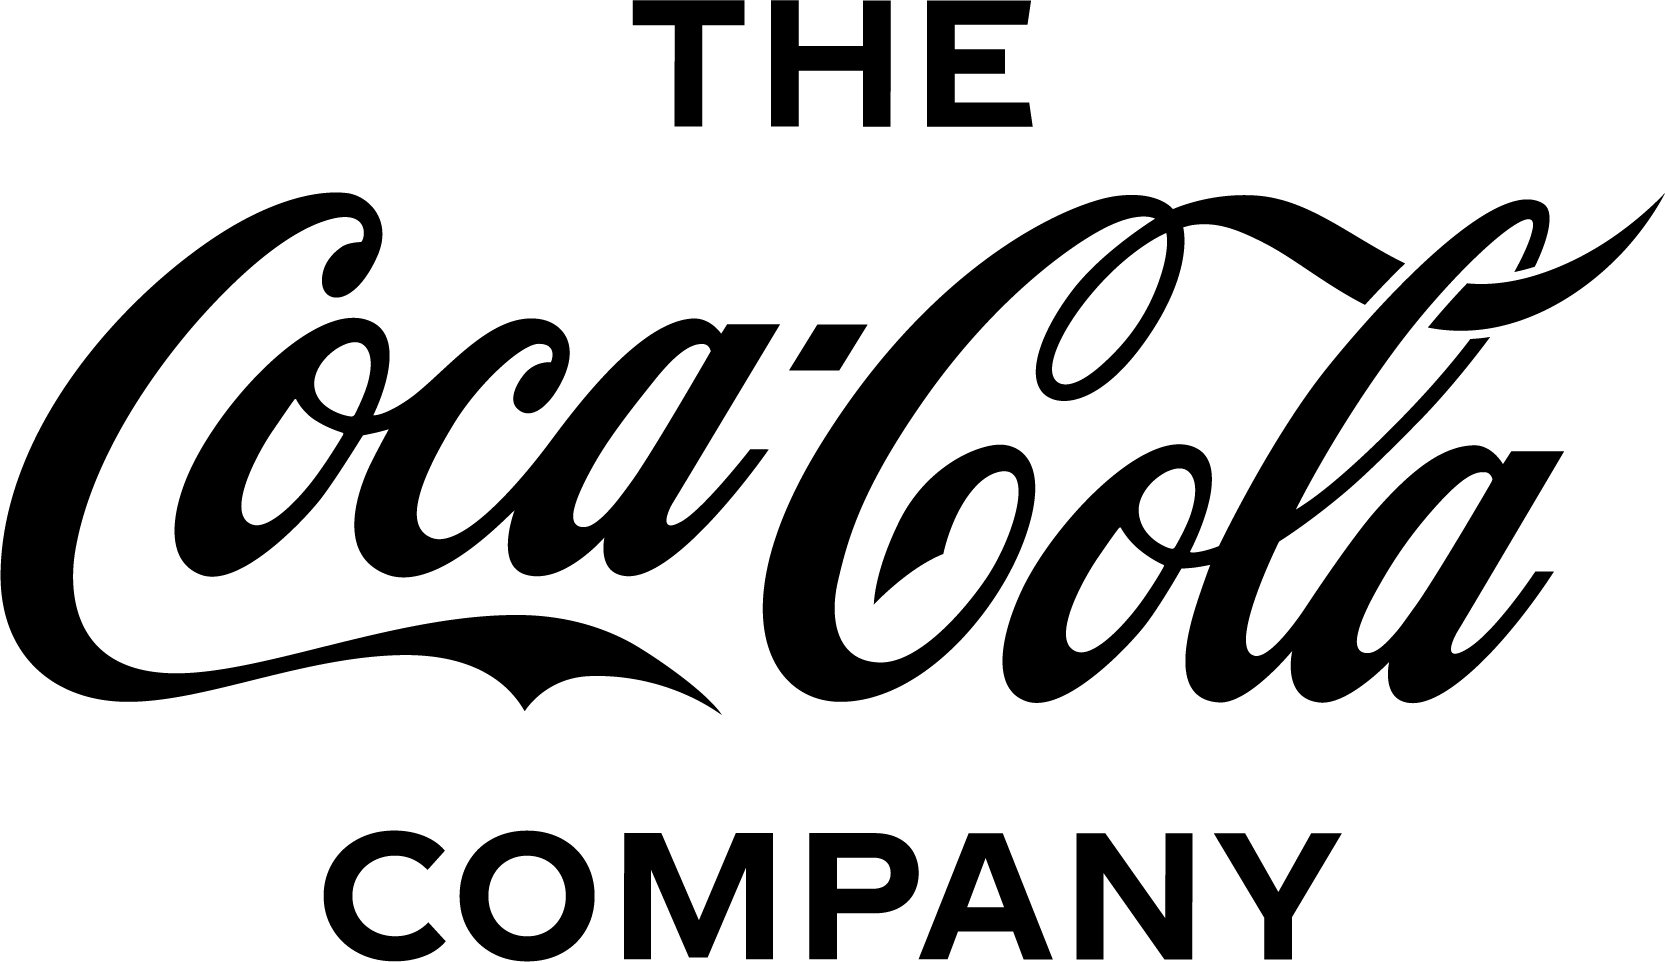 Coca-Cola Company.jpeg